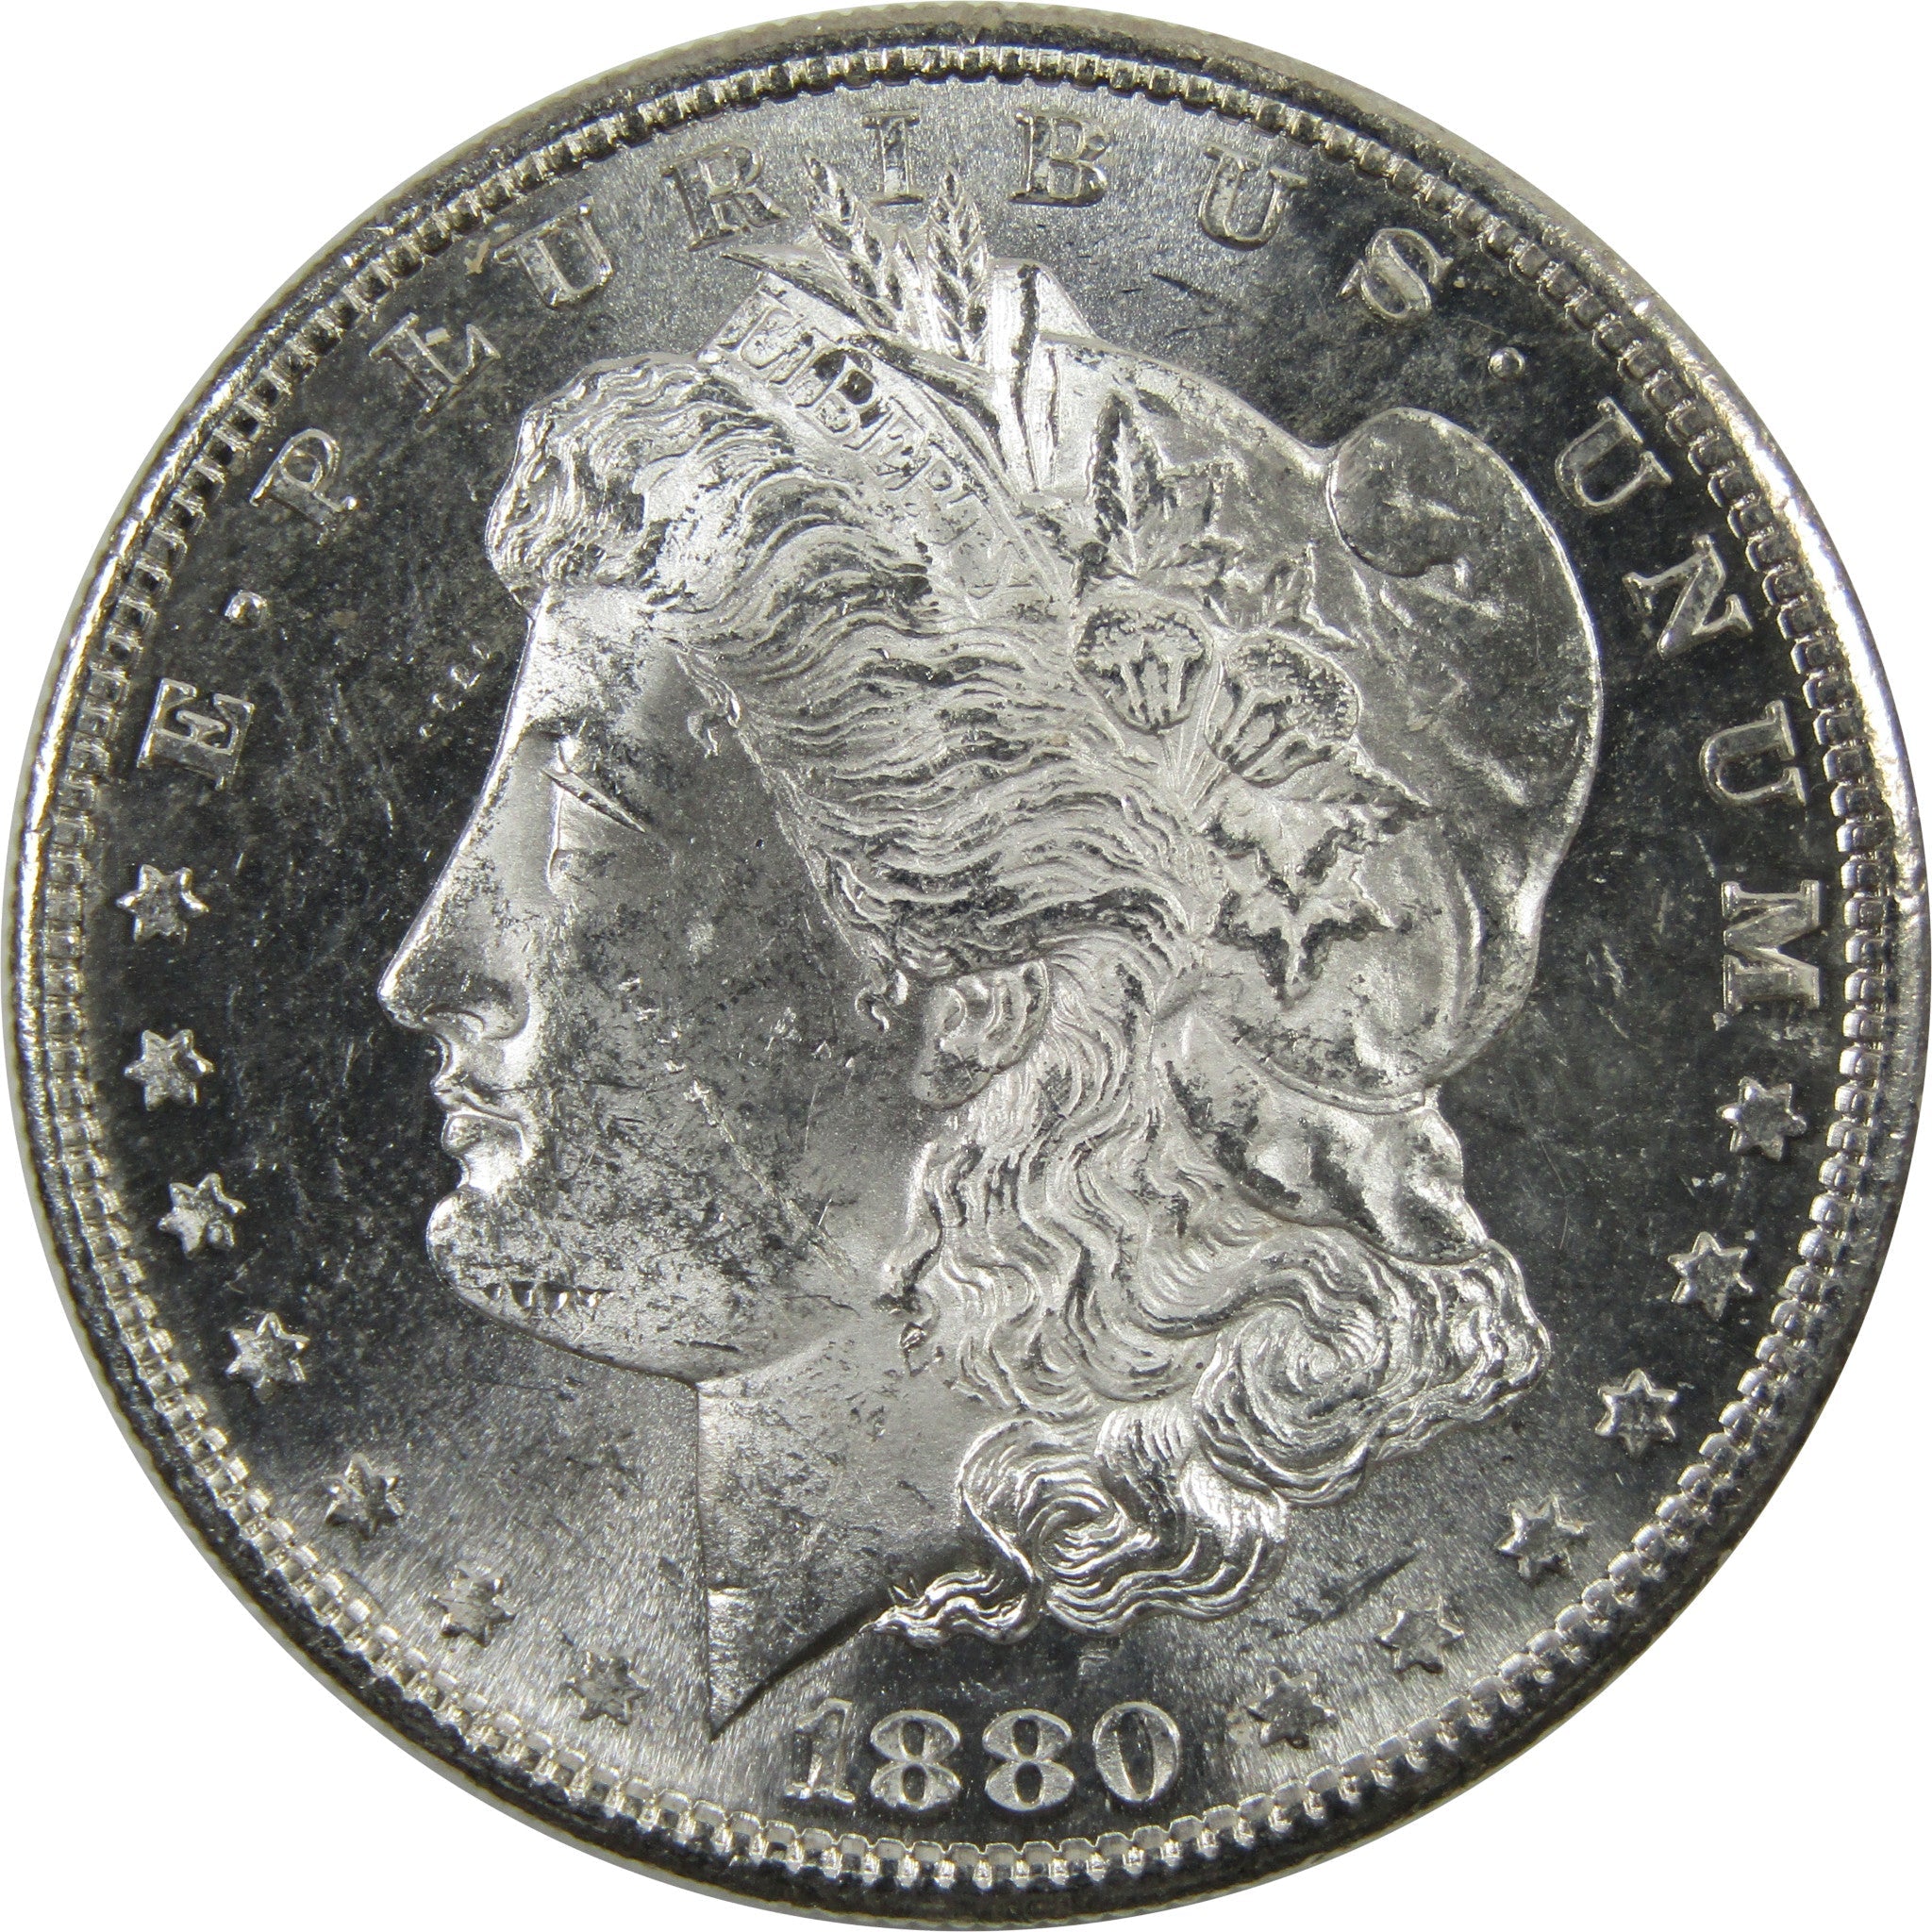 1880 S Morgan Dollar BU Uncirculated 90% Silver $1 Coin SKU:I5438 - Morgan coin - Morgan silver dollar - Morgan silver dollar for sale - Profile Coins &amp; Collectibles